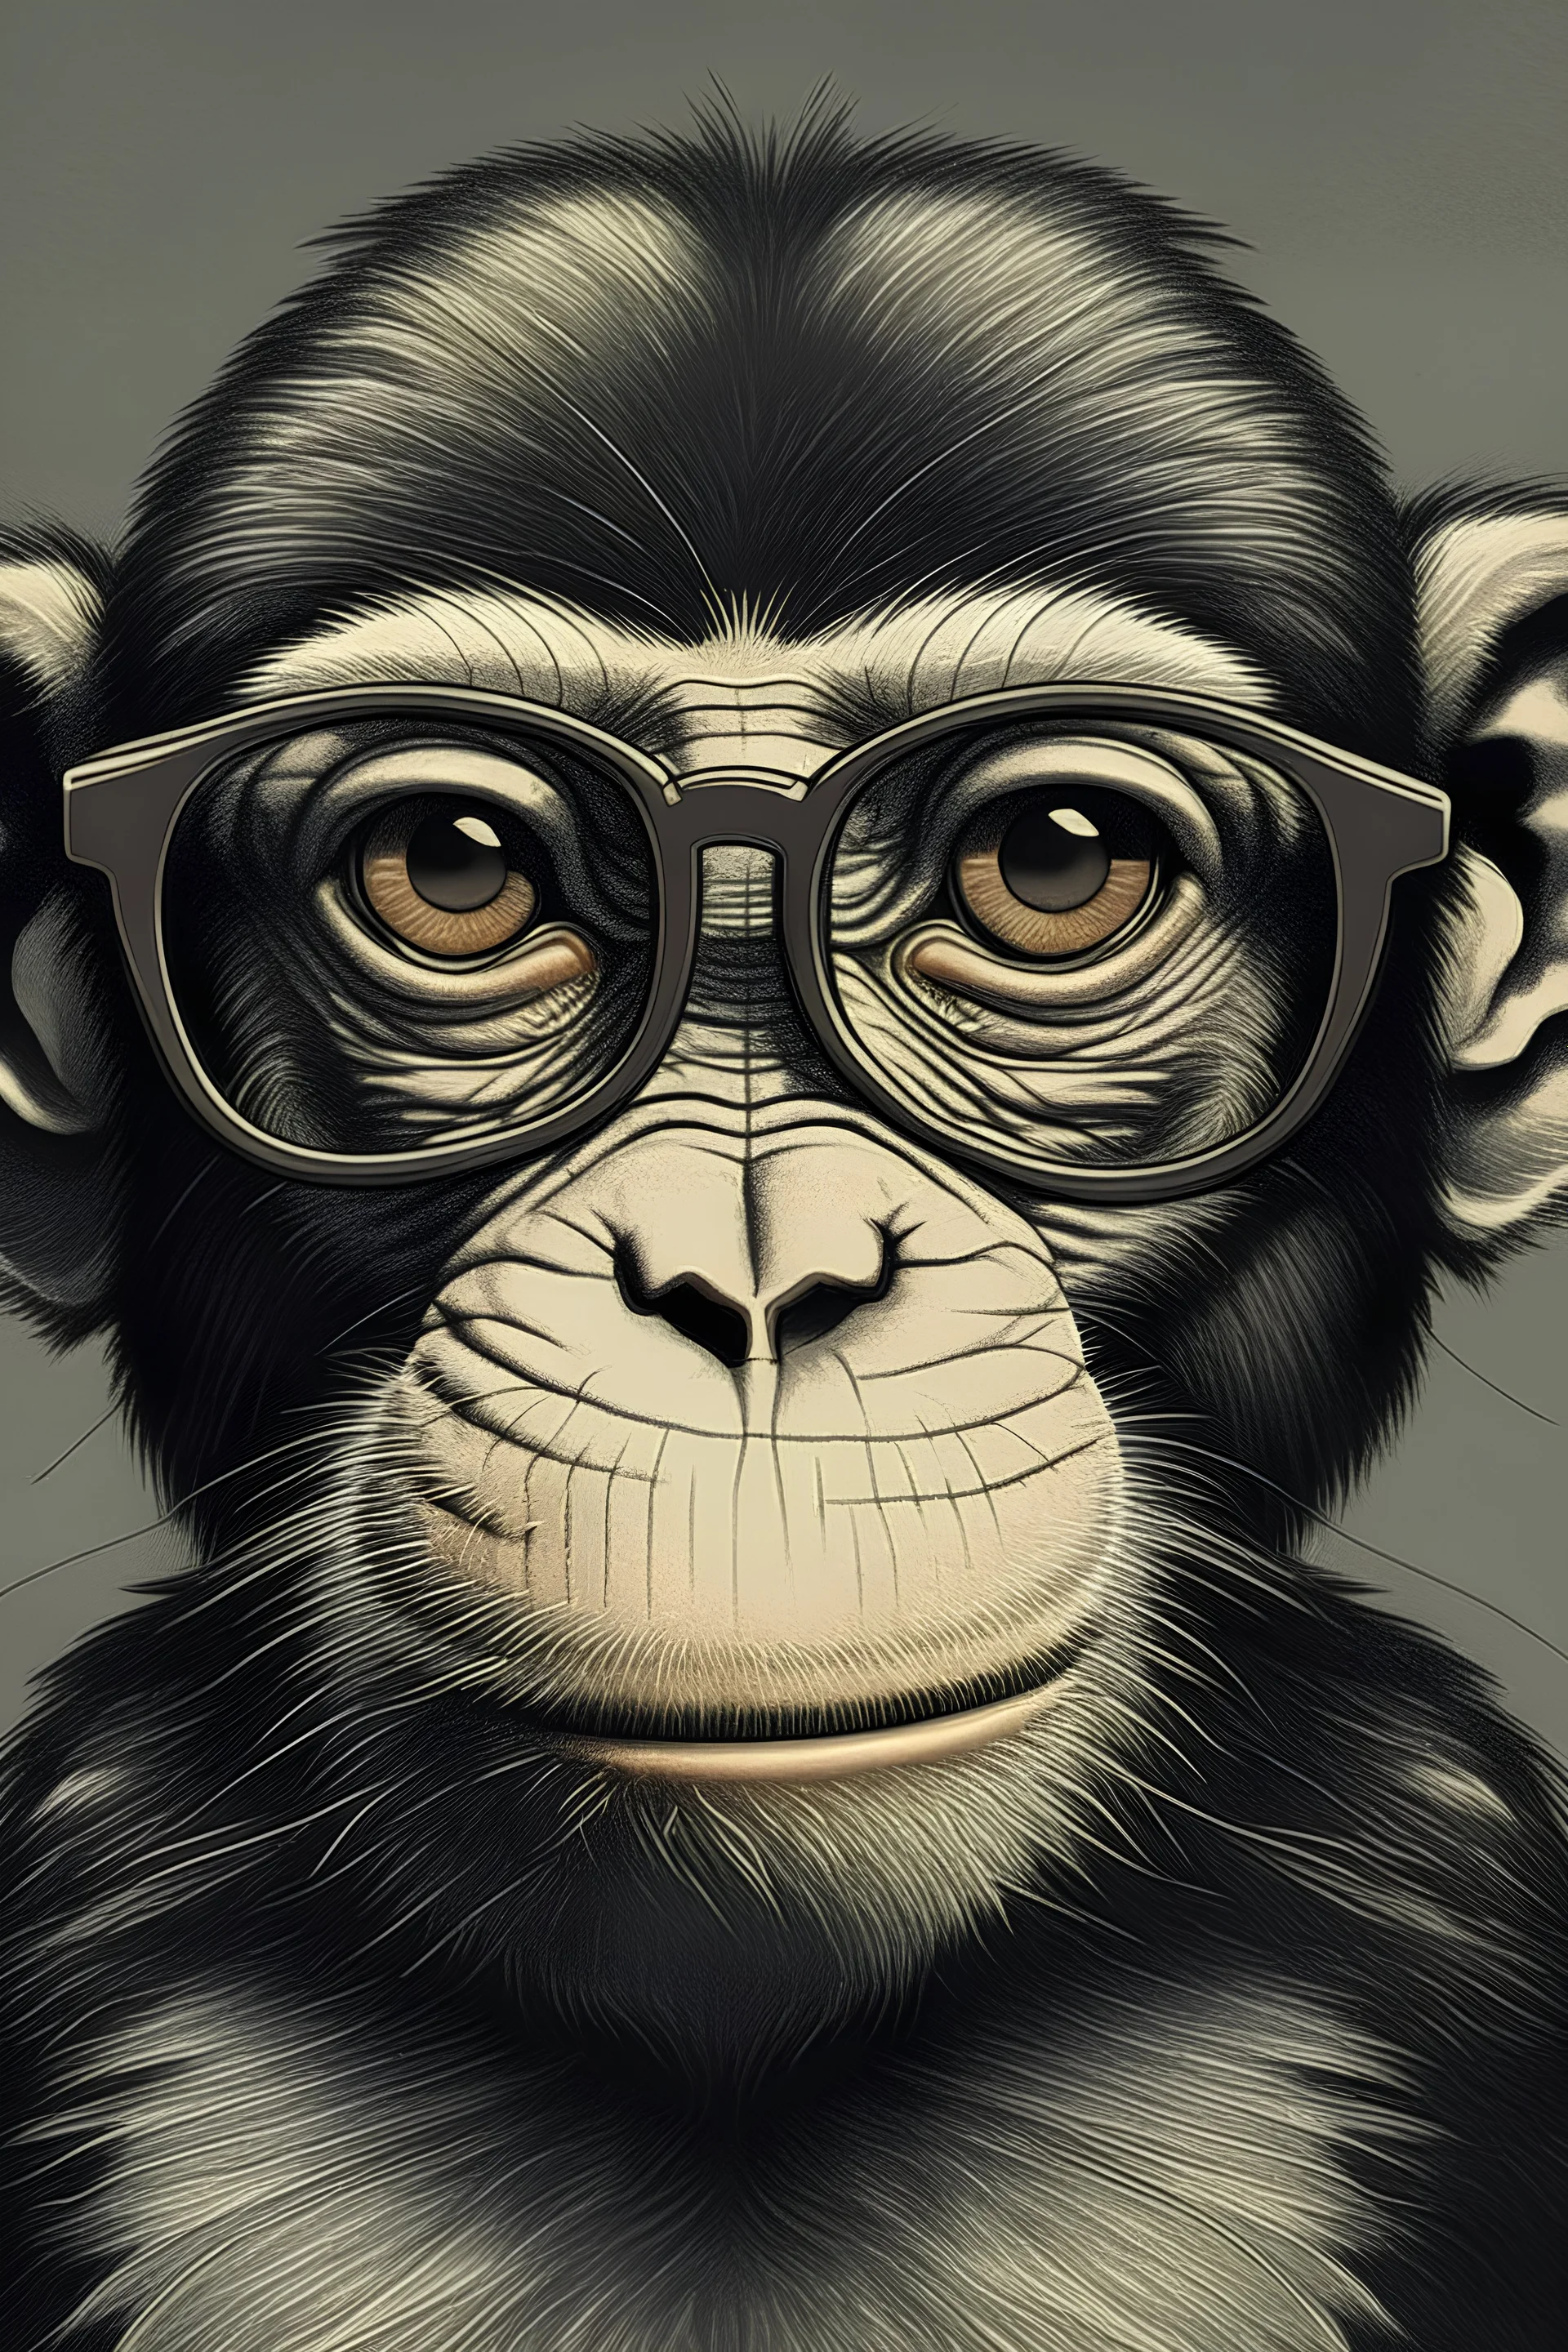 make a portrait of a monkey wearing glasses